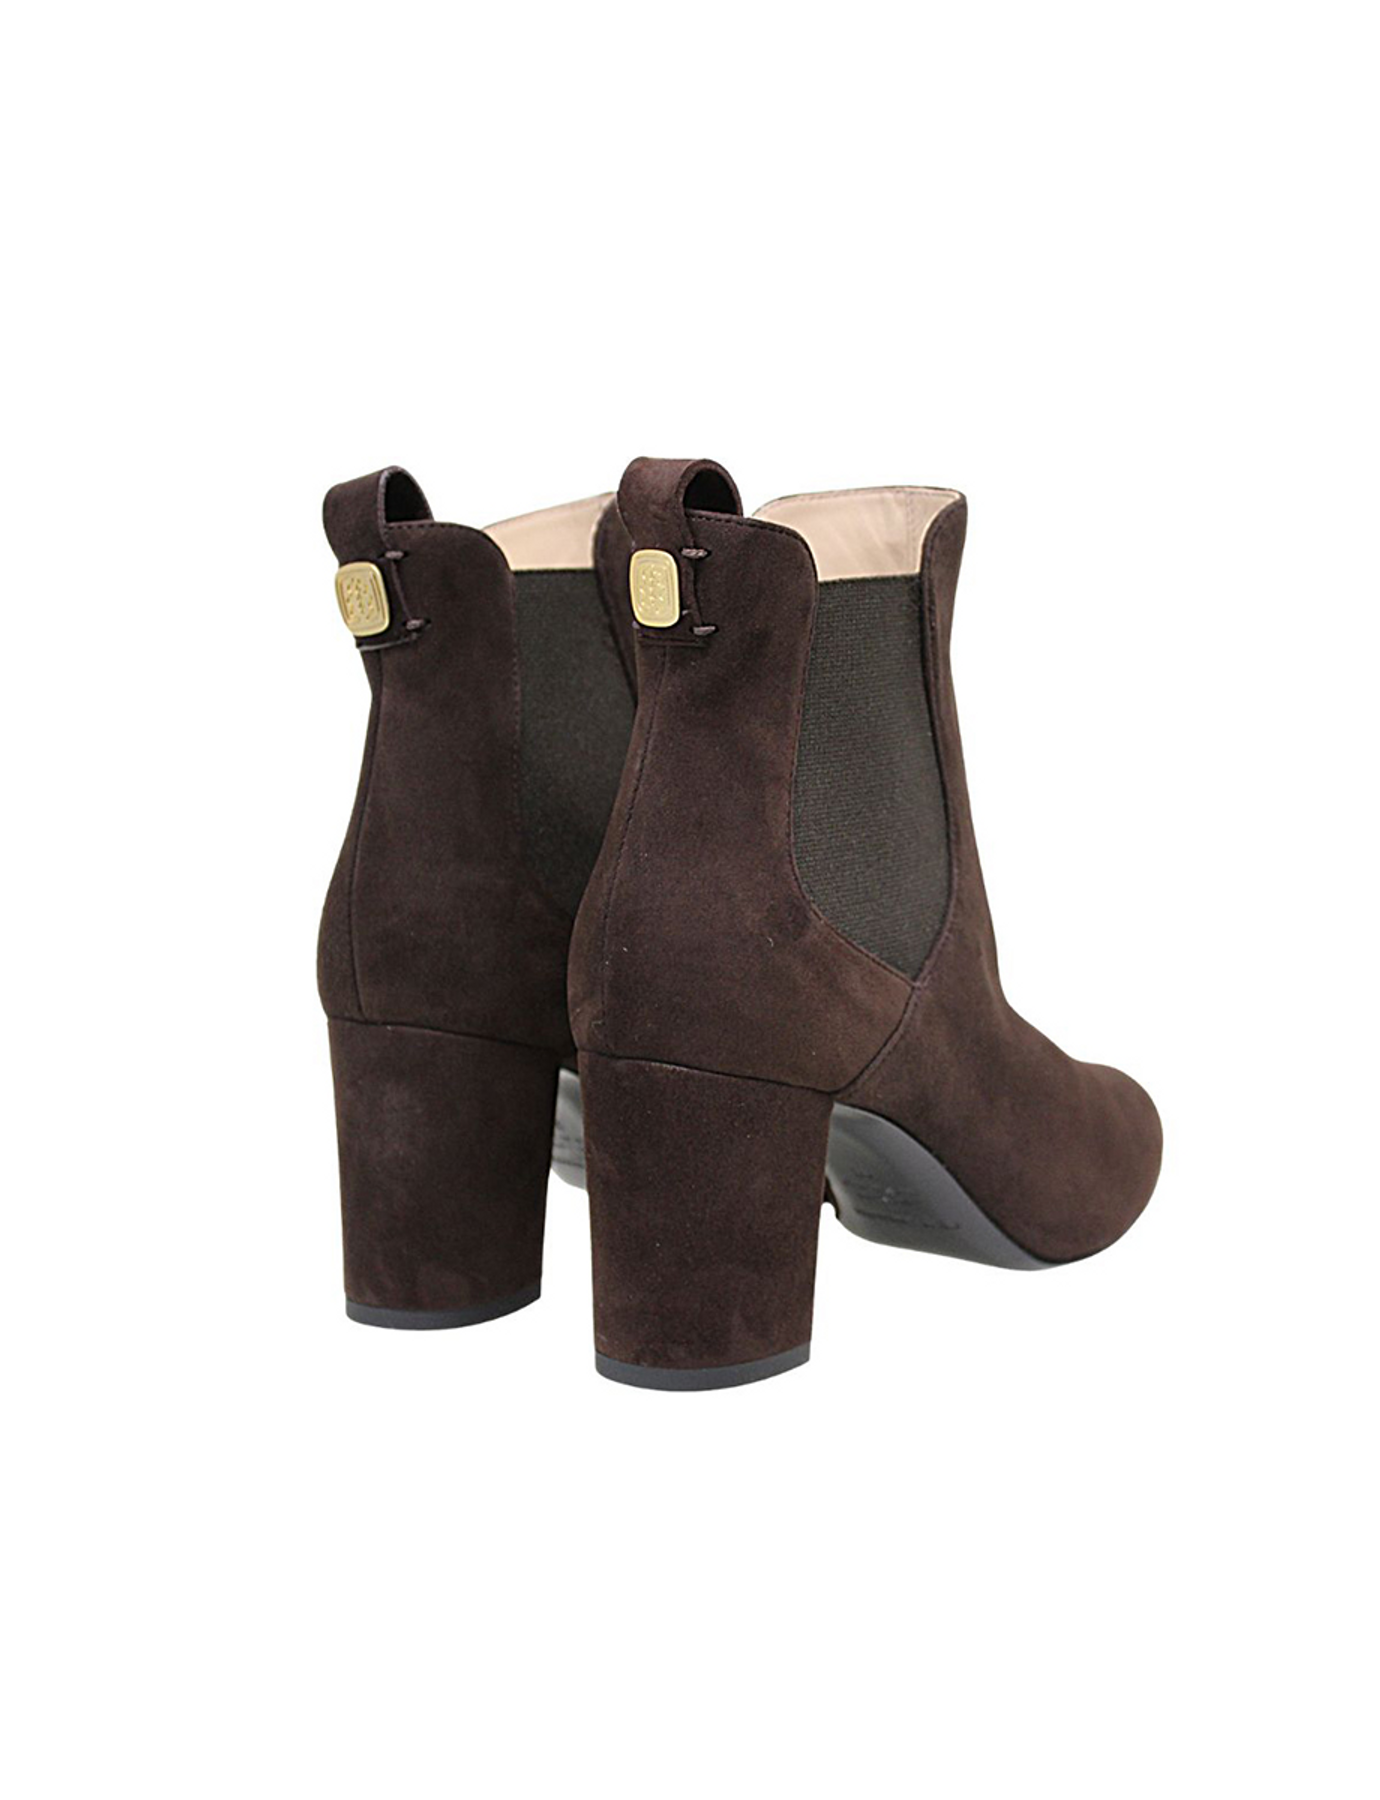 booties-with-brown-heels-in-suede